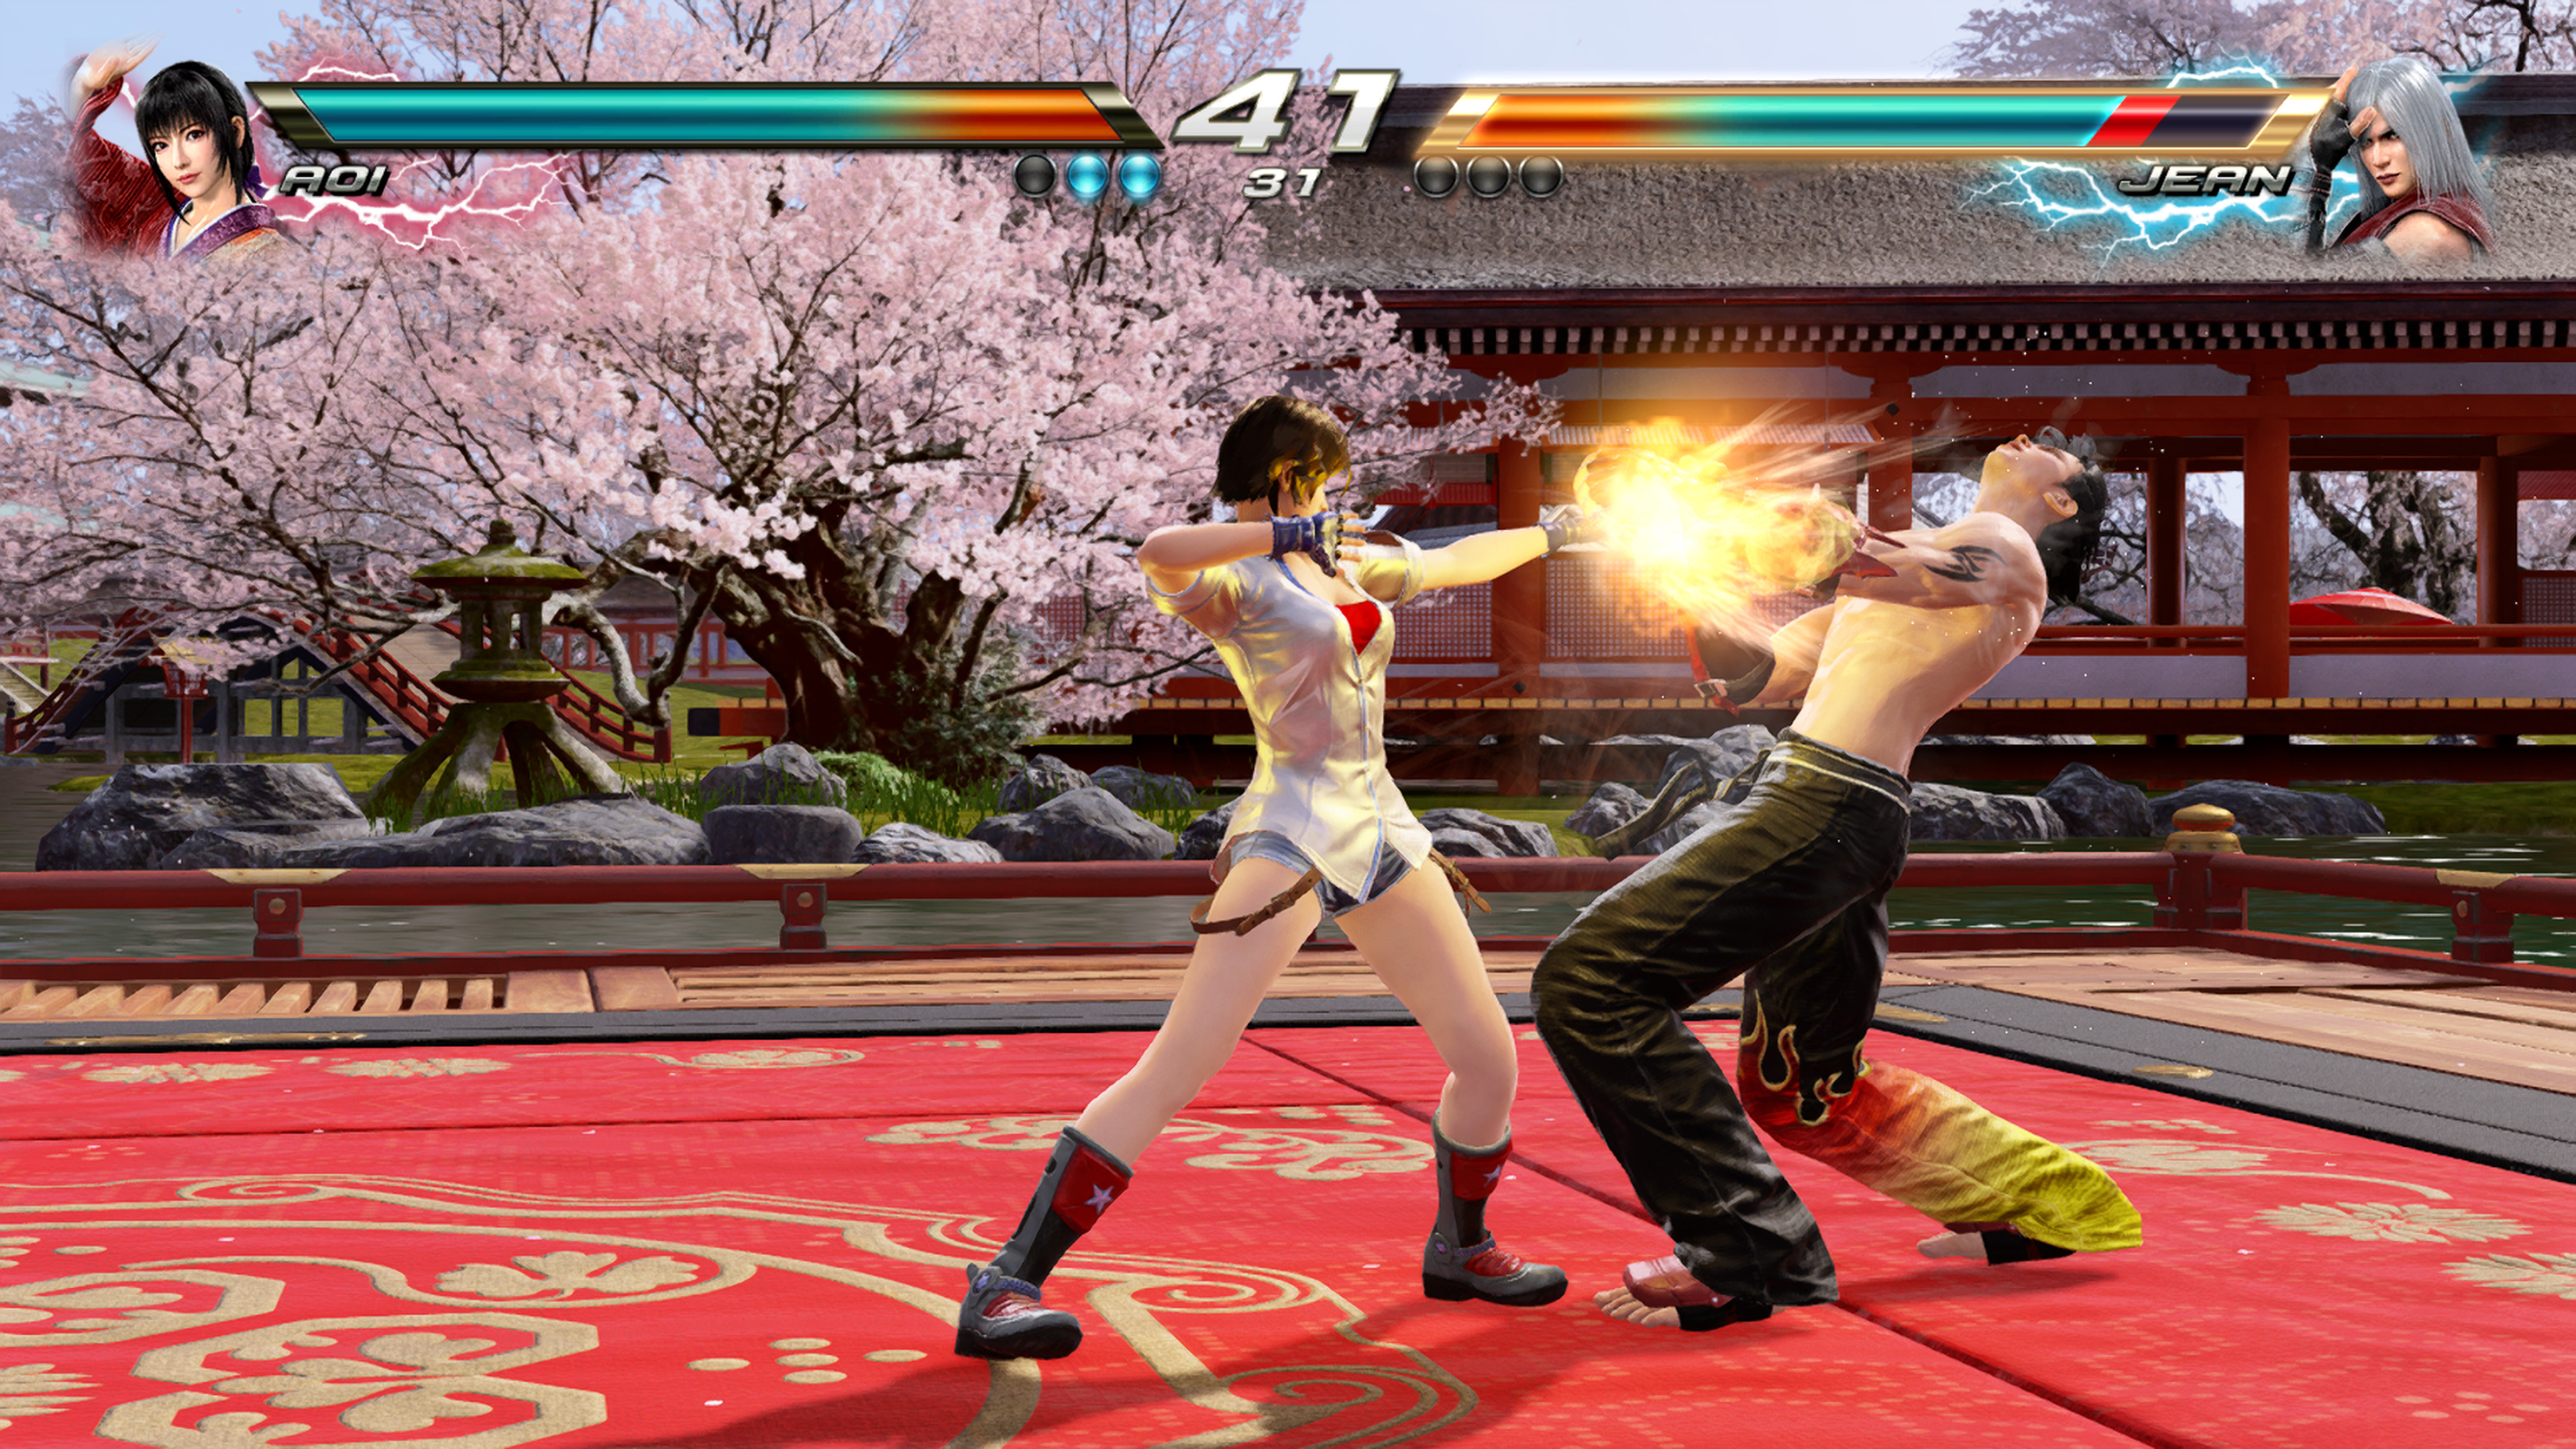 Скриншот №4 к Virtua Fighter 5 Ultimate Showdown основная игра + набор TEKKEN 7 DLC Pack